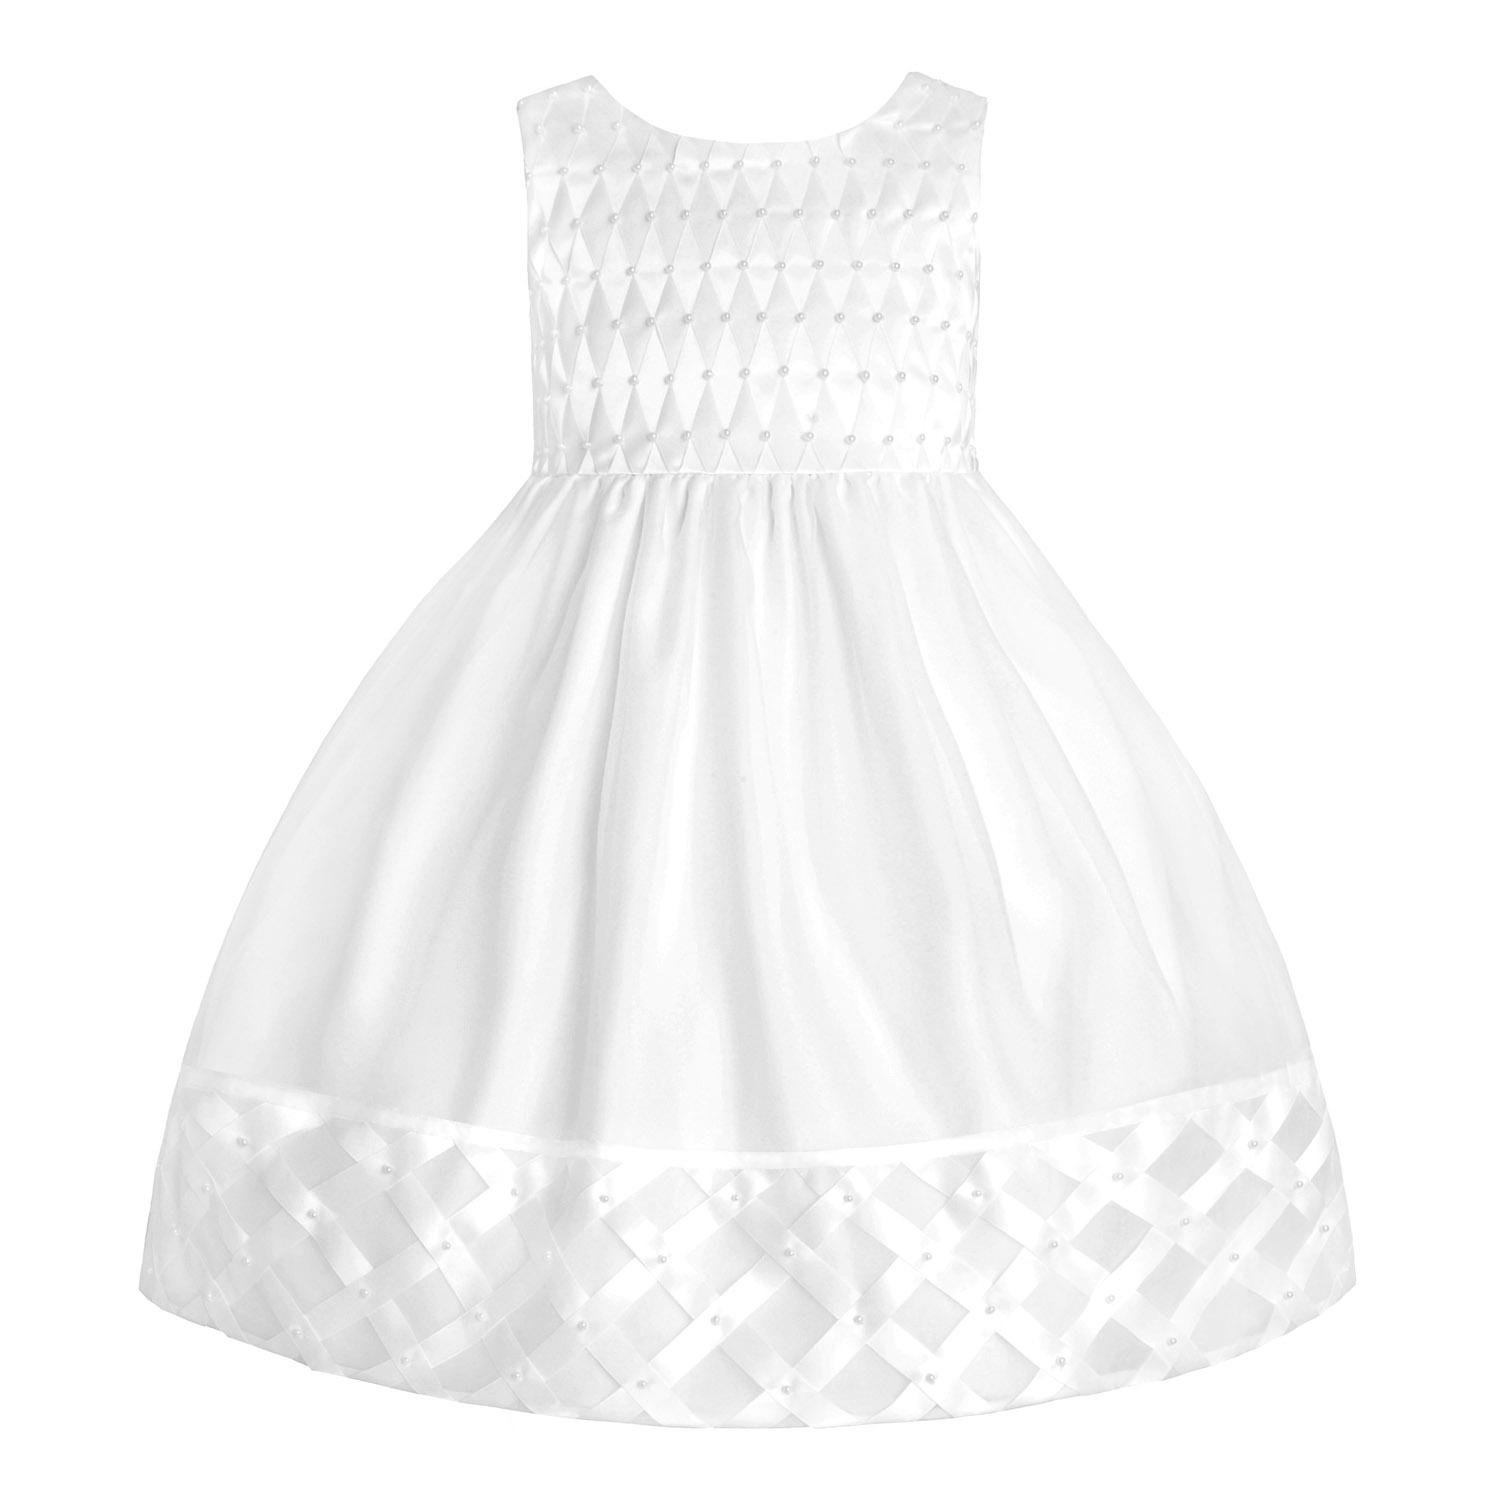 American Princess Infant & Toddler Girl's Embellished Party Dress